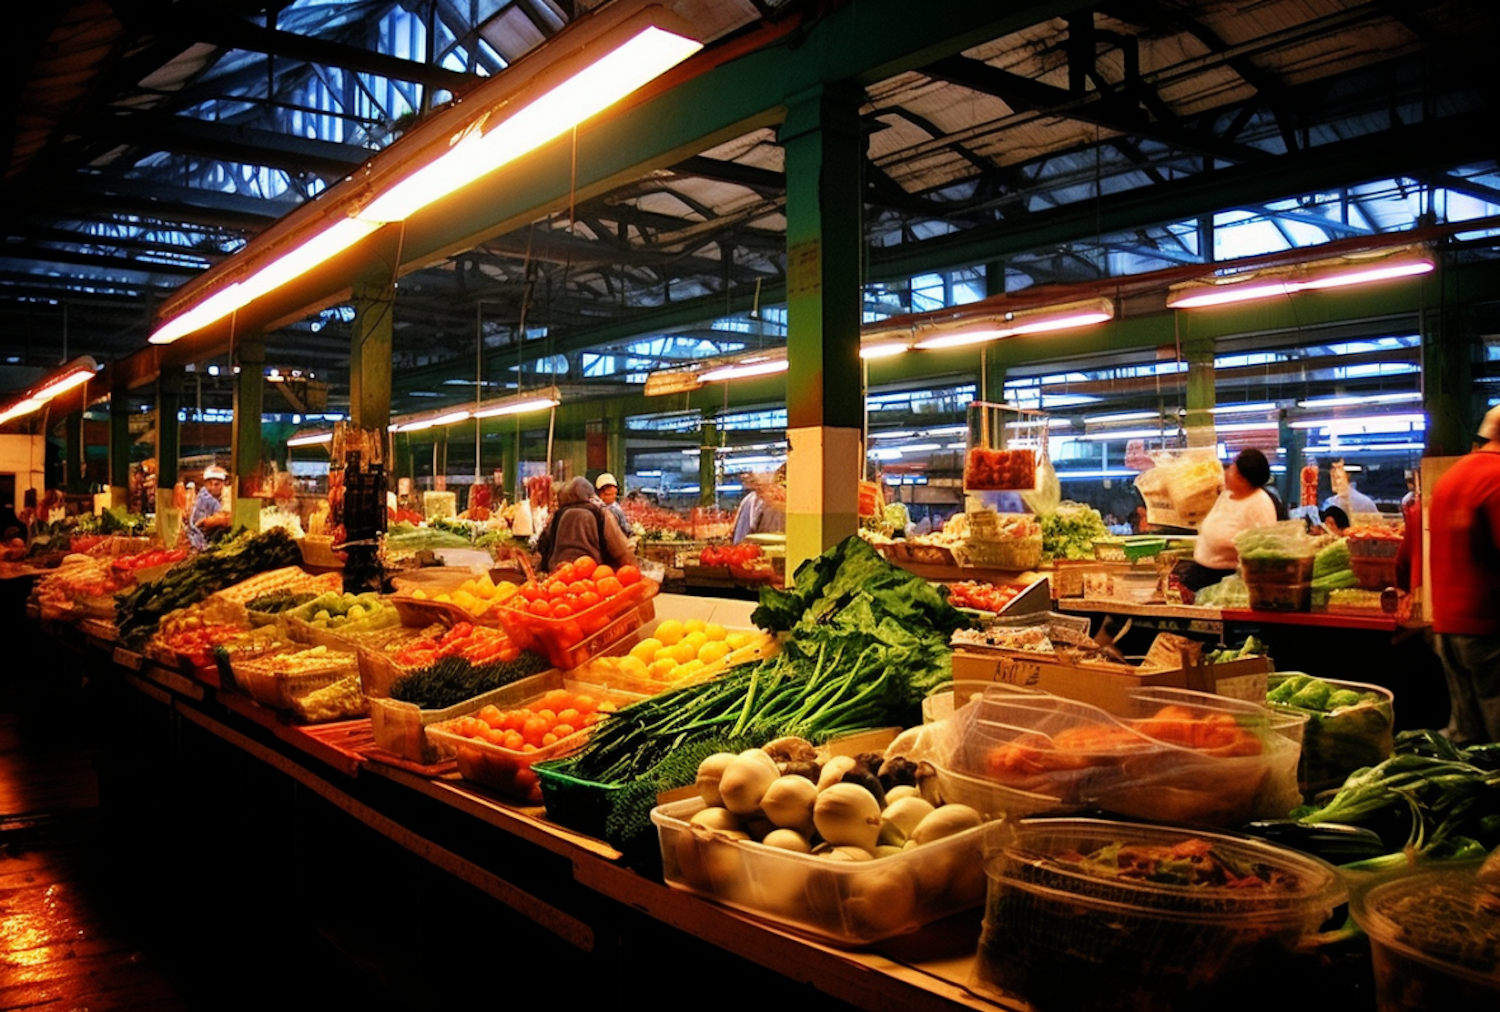 The Vivid Indoor Community Market